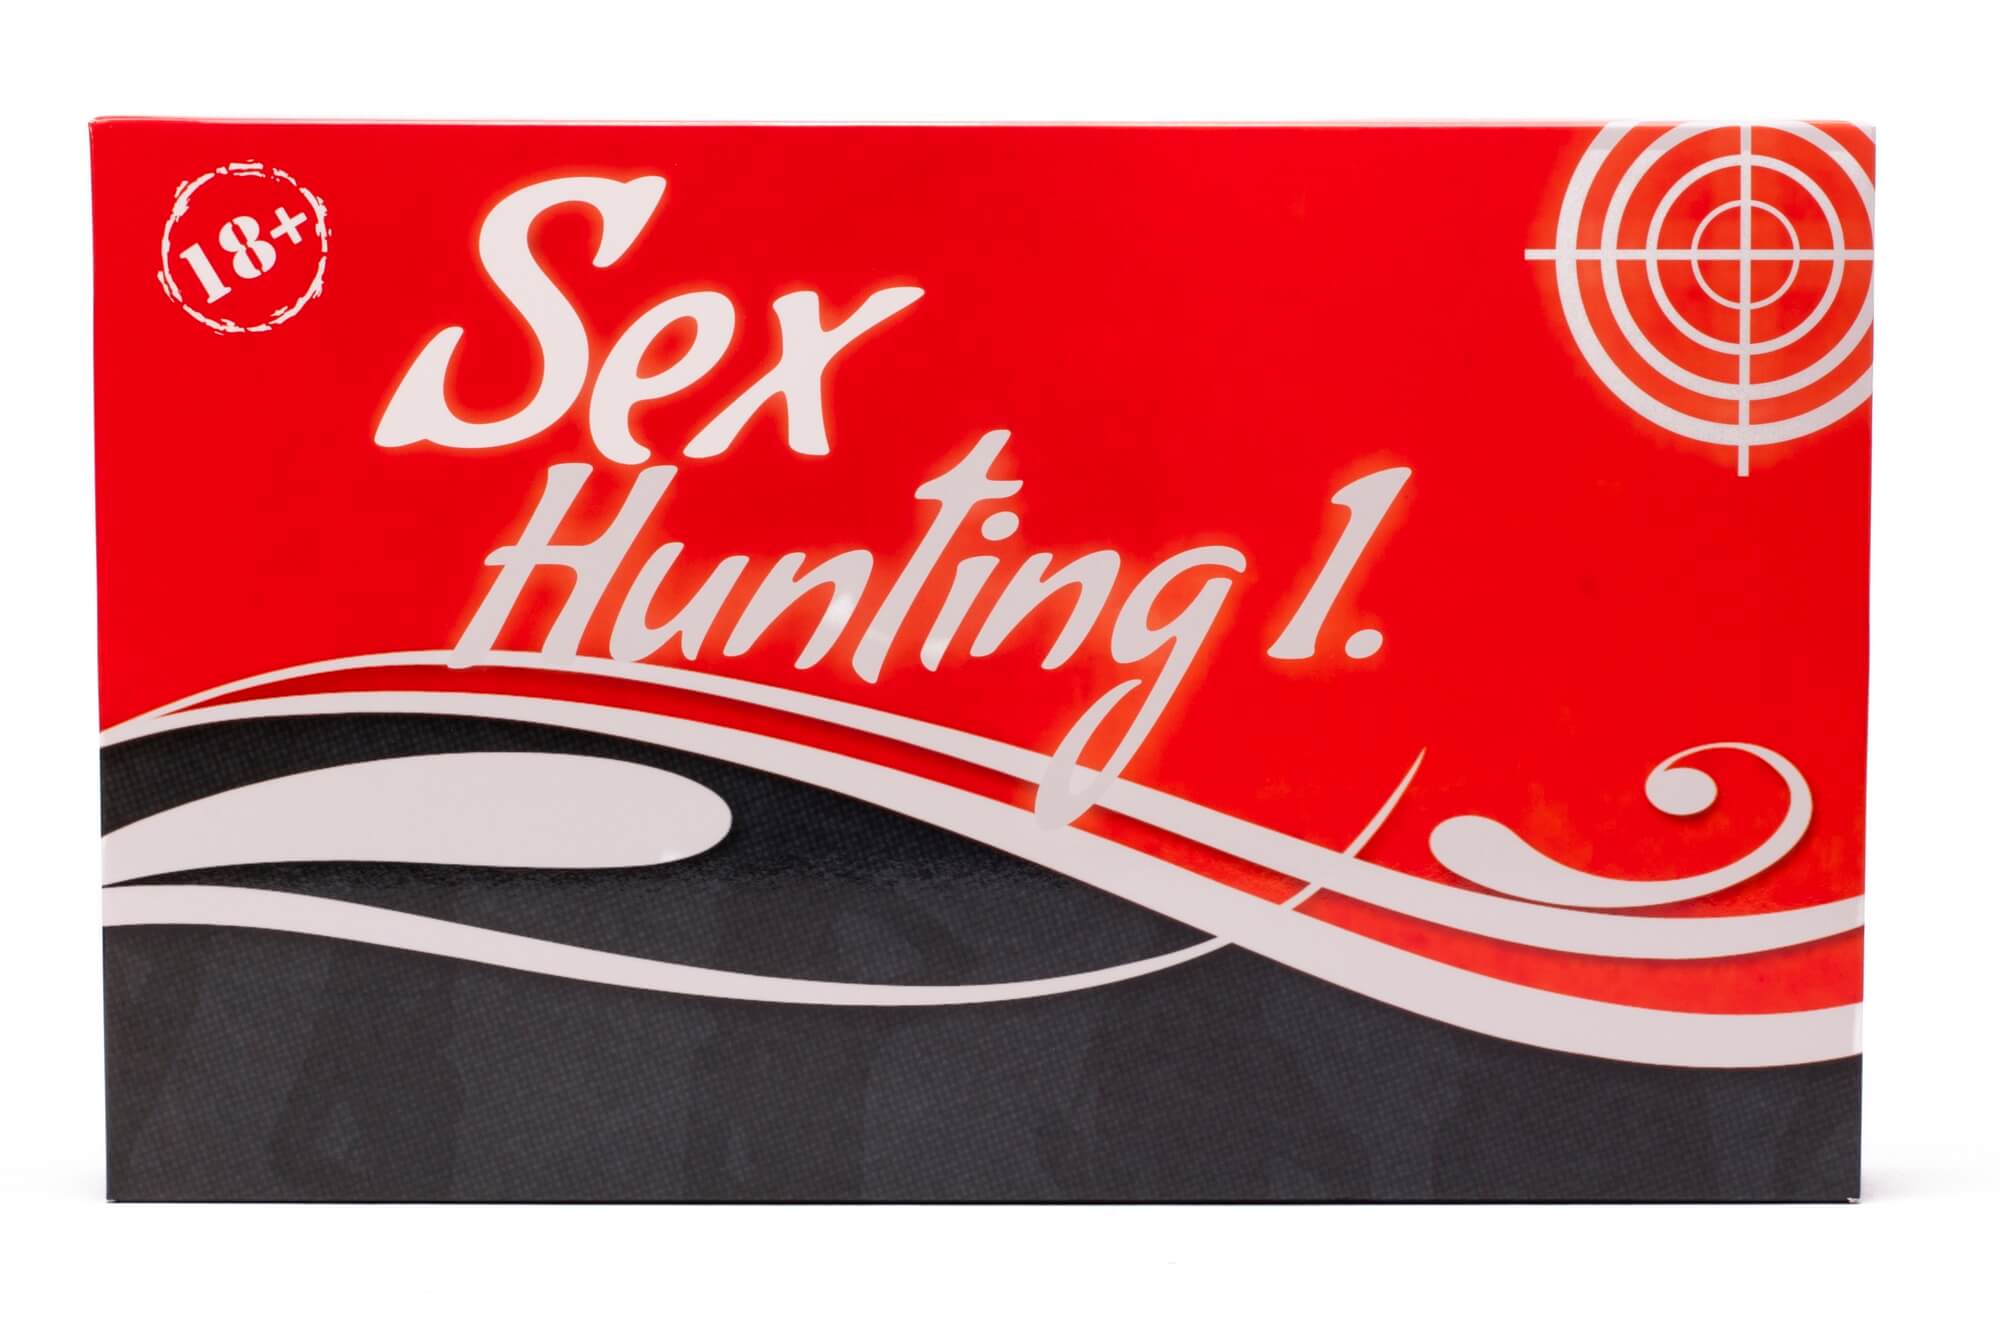 Sex Hunting 1 - erotikus társasjáték (magyar) kép